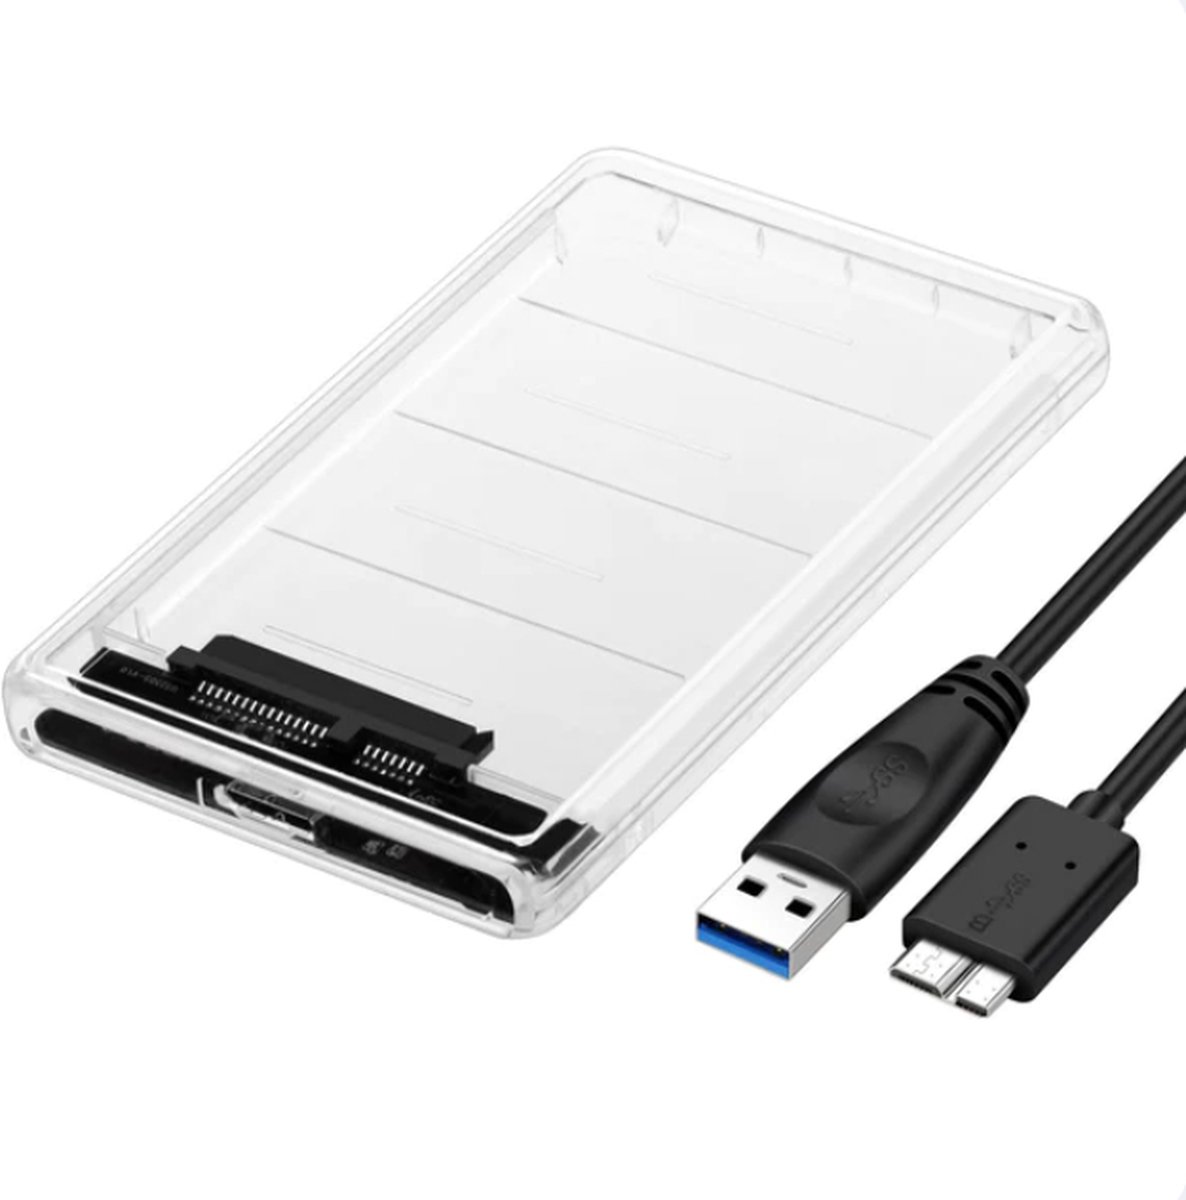 EziCase® SwiftSaver - 2.5 Inch USB 3.0 naar SATA HDD Behuizing voor Hoge-Snelheid Opslag